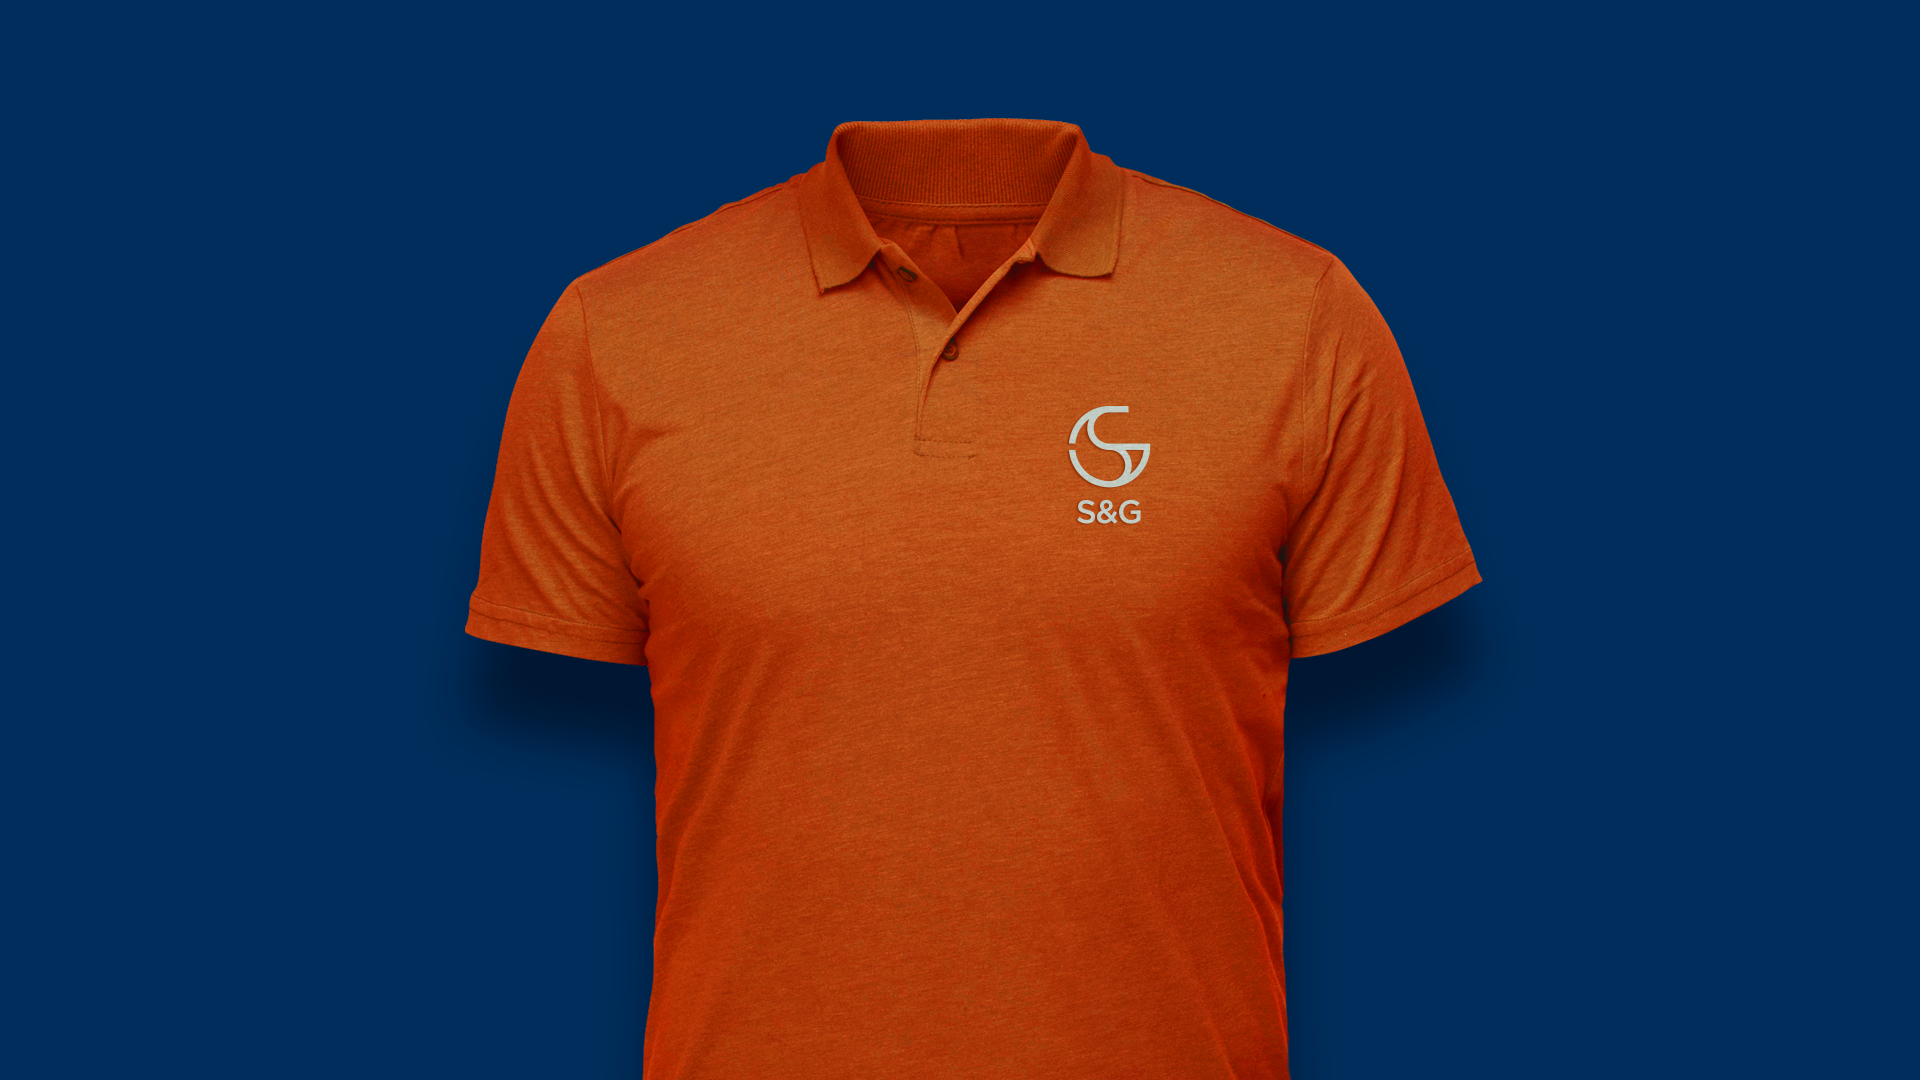 S&G Commodities shirt design